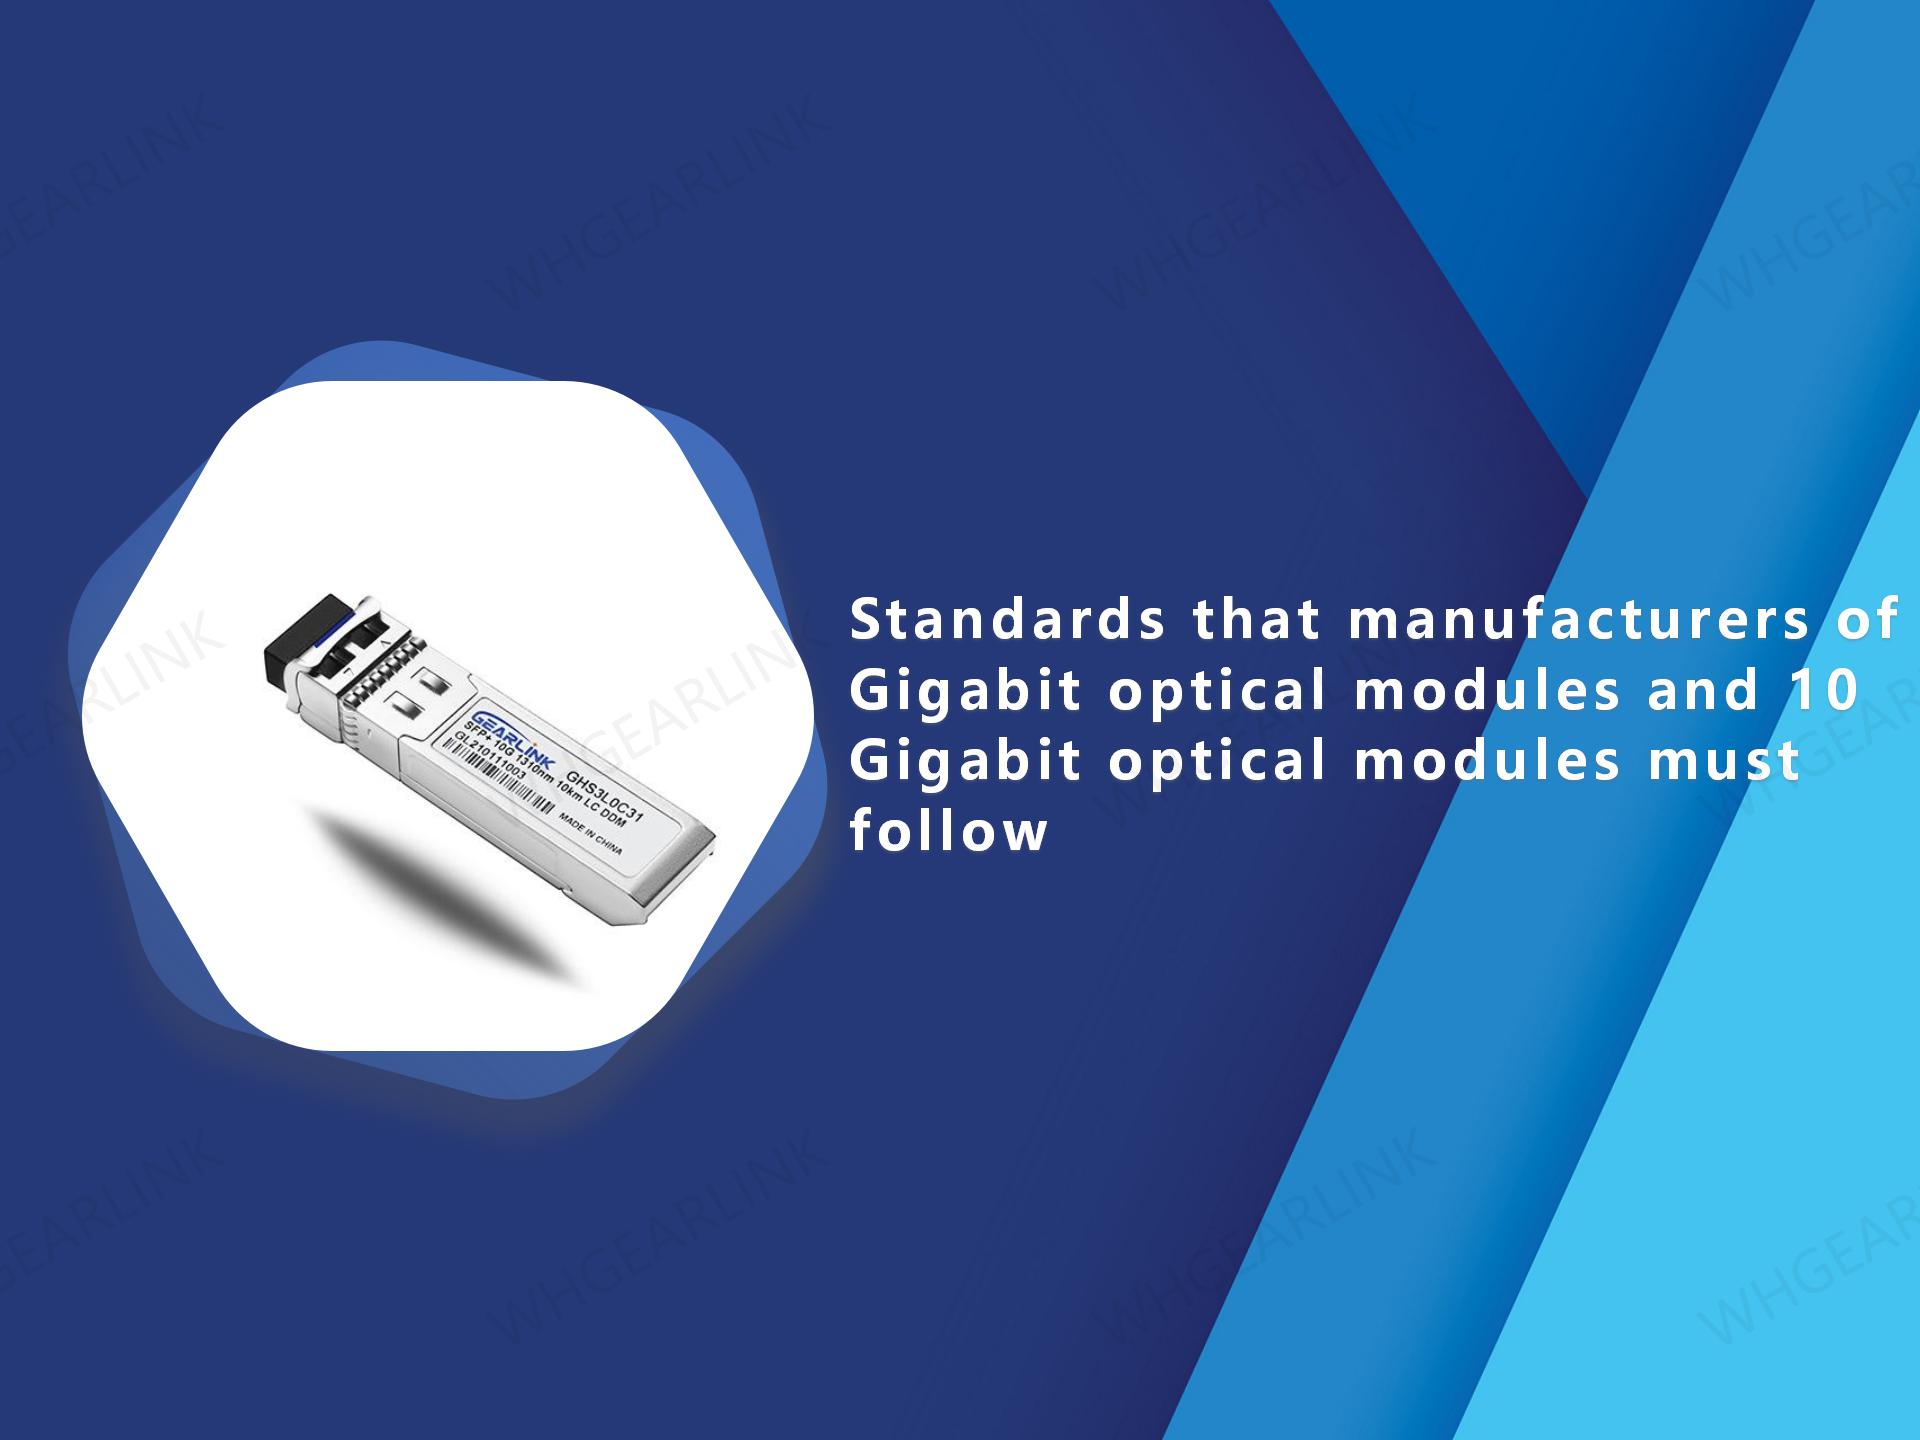 Standards that manufacturers of Gigabit optical modules and 10 Gigabit optical modules must follow